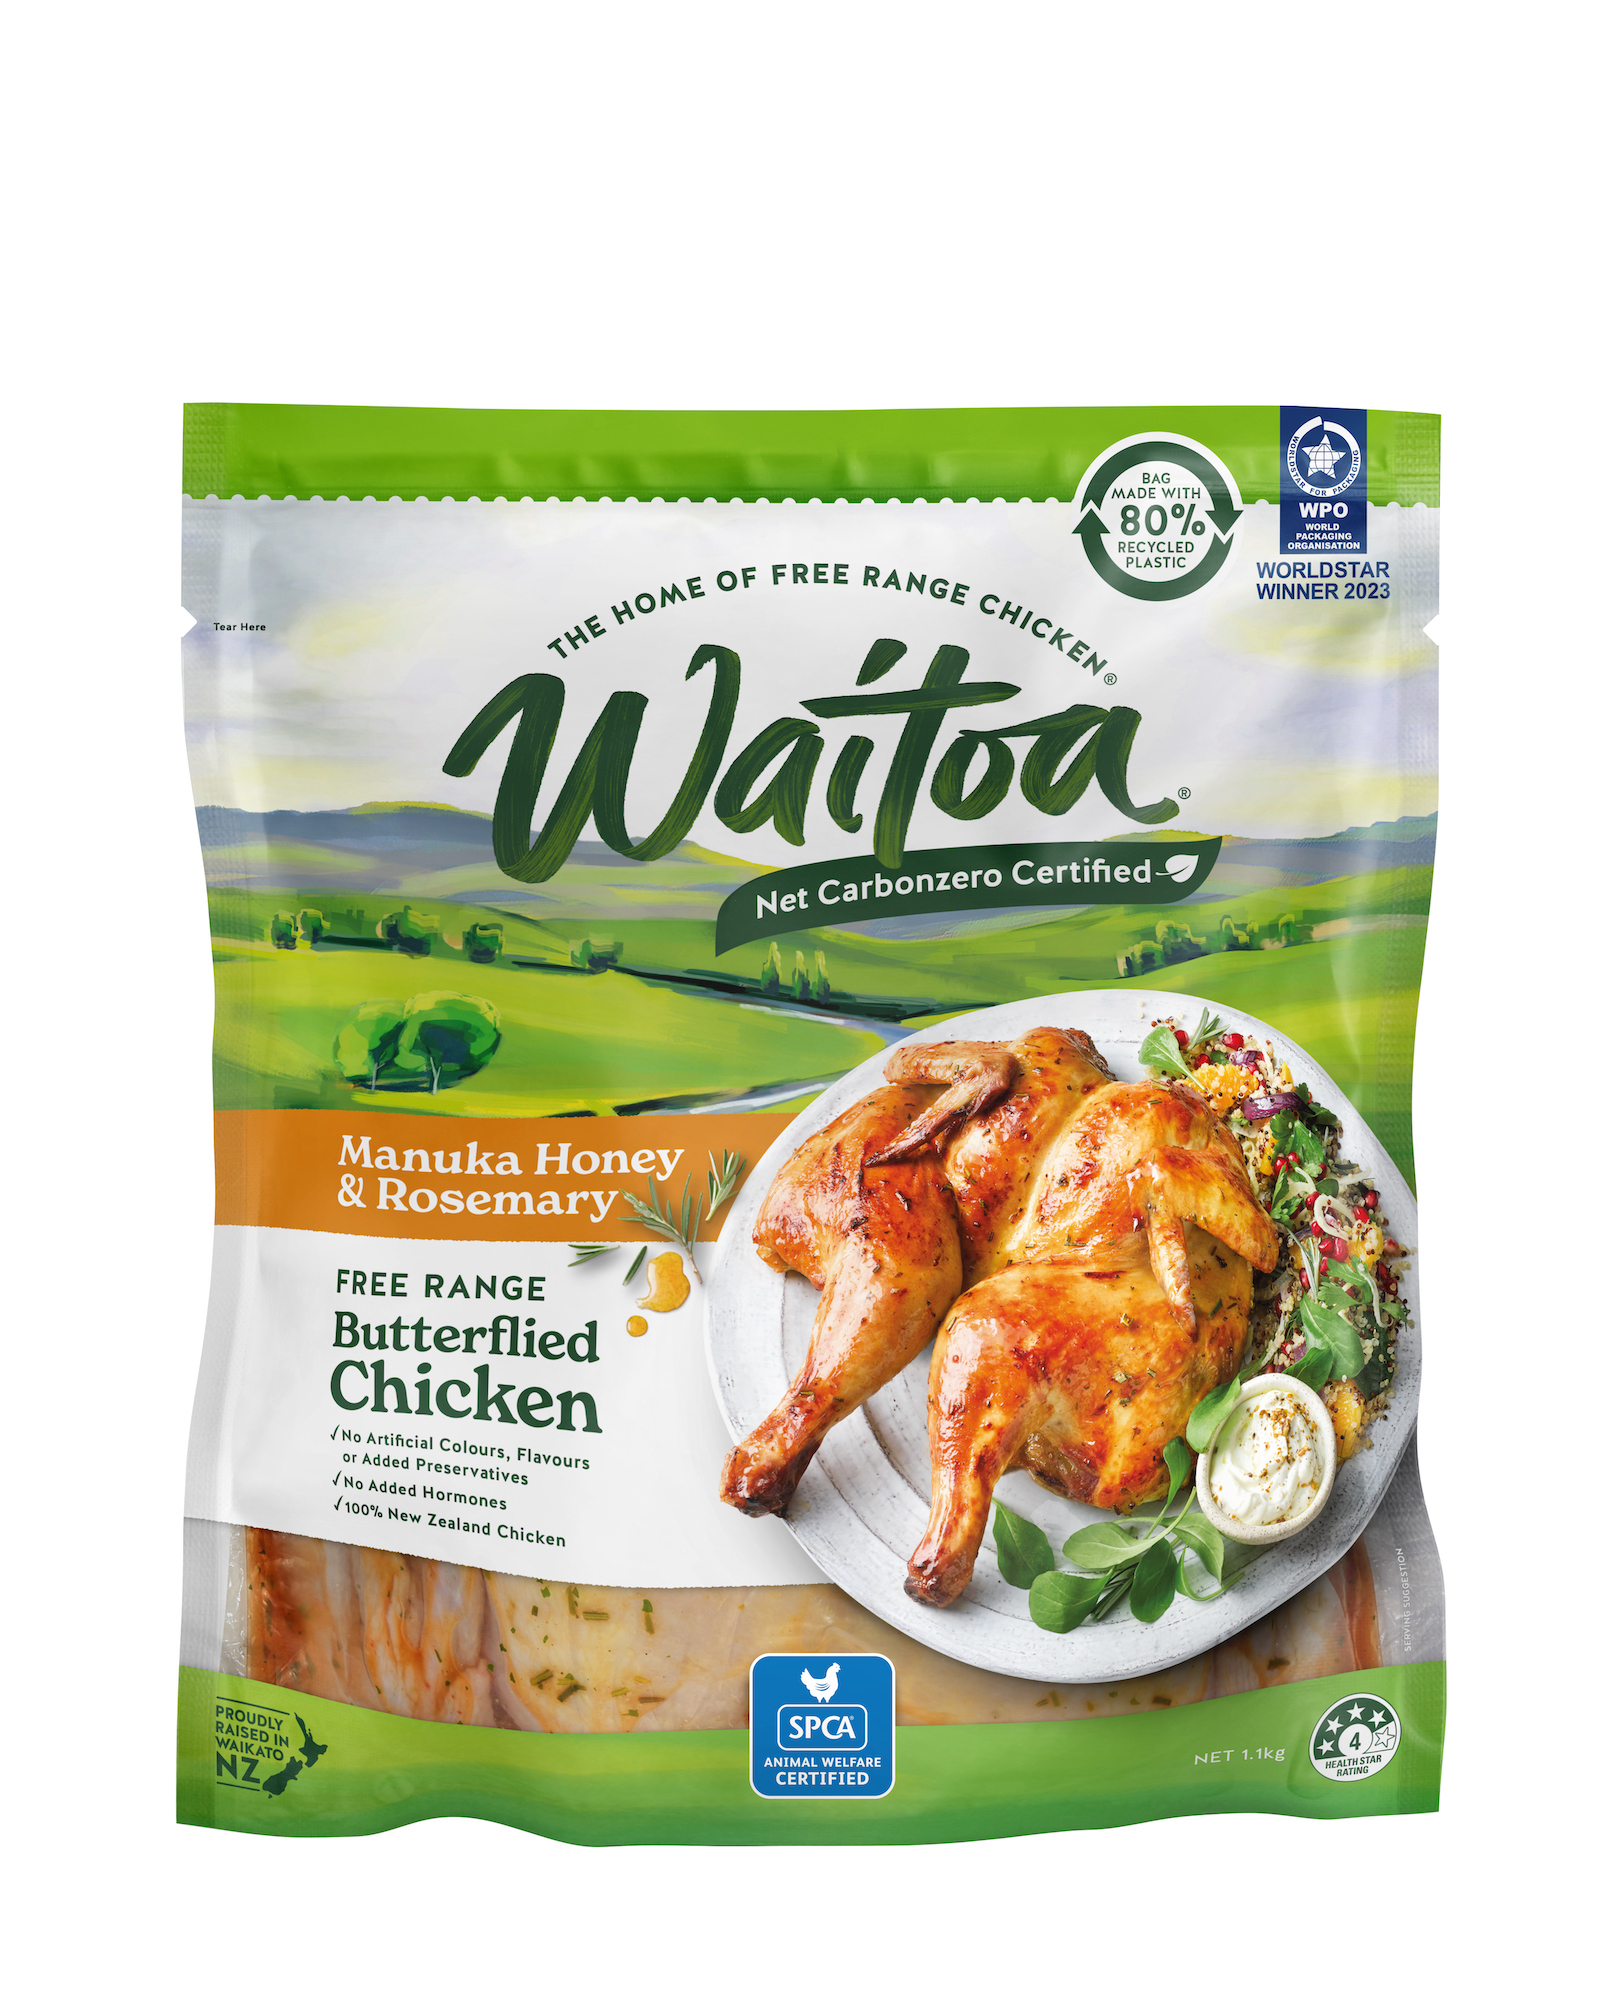 Bag containing a Waitoa Free Range Manuka Honey and Rosemary Butterflied Chicken